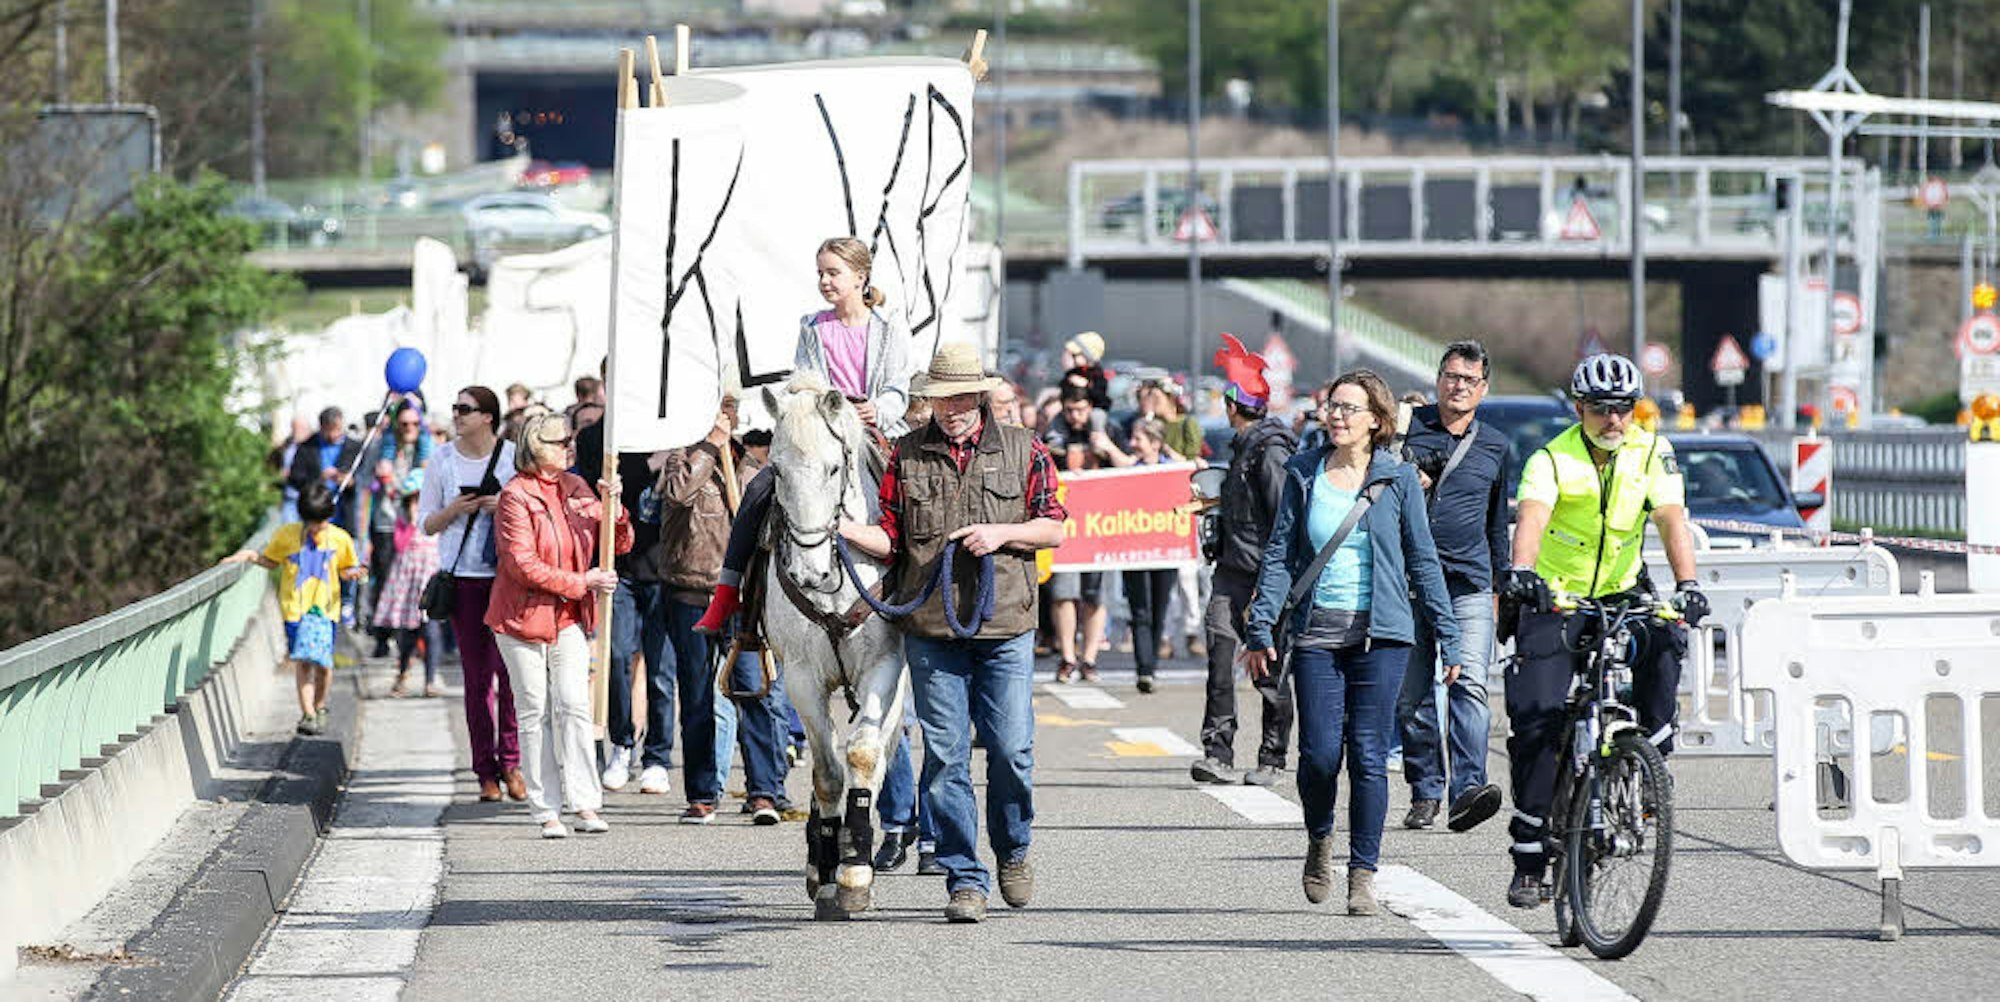 Kalkberg-Pferd Rajo führte den Demonstrationszug der Kalkberg-Gegner über die Autobahn an.